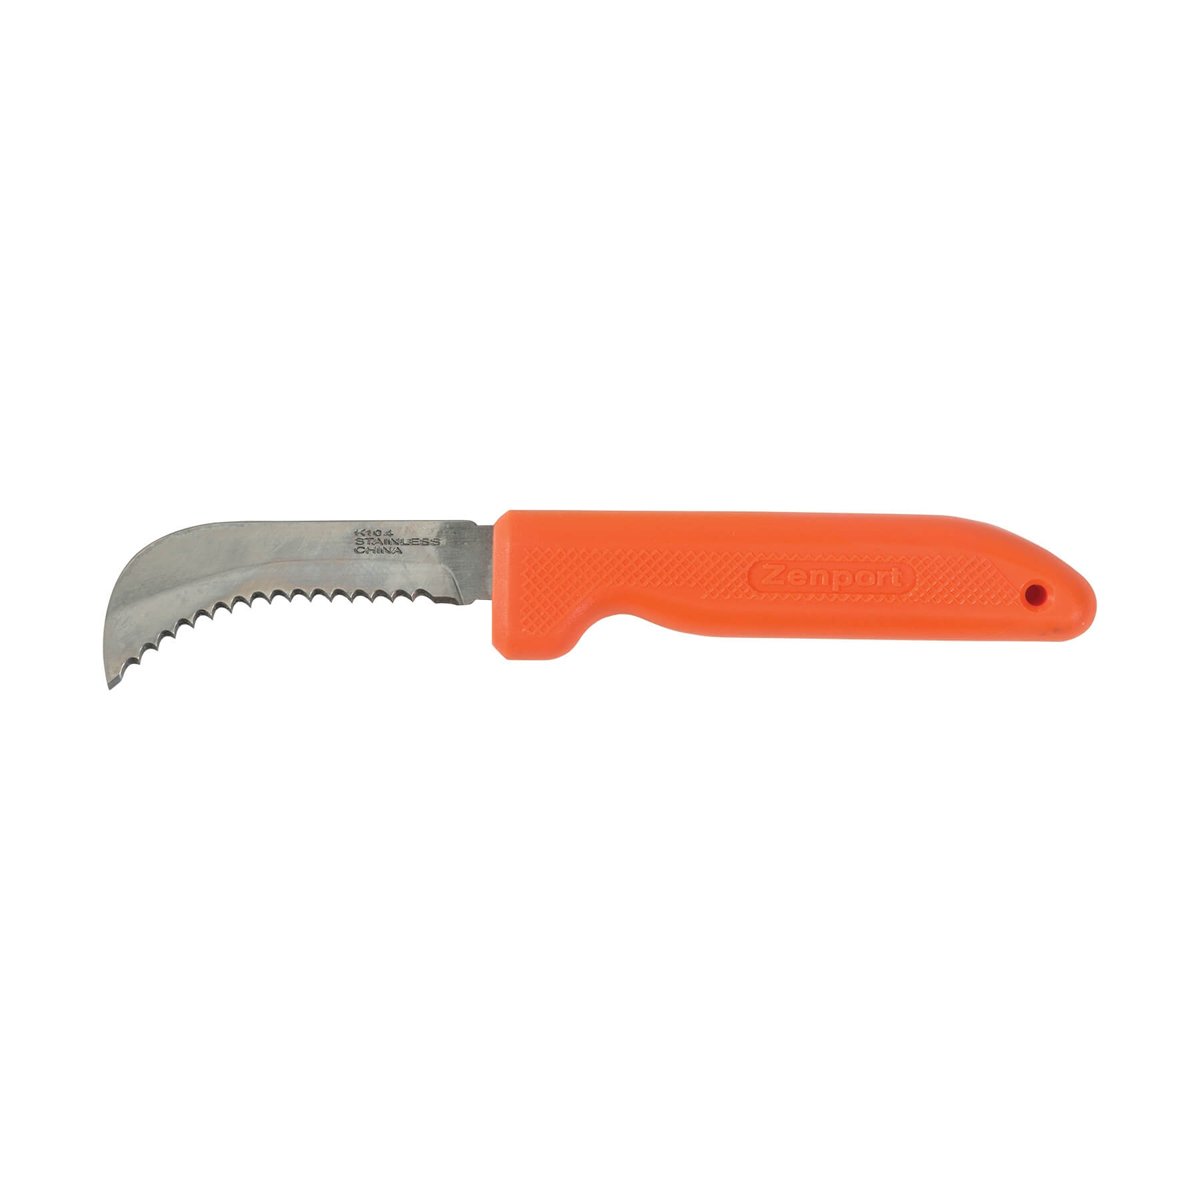 Sod Cutter Harvesting Knife 3 Blade